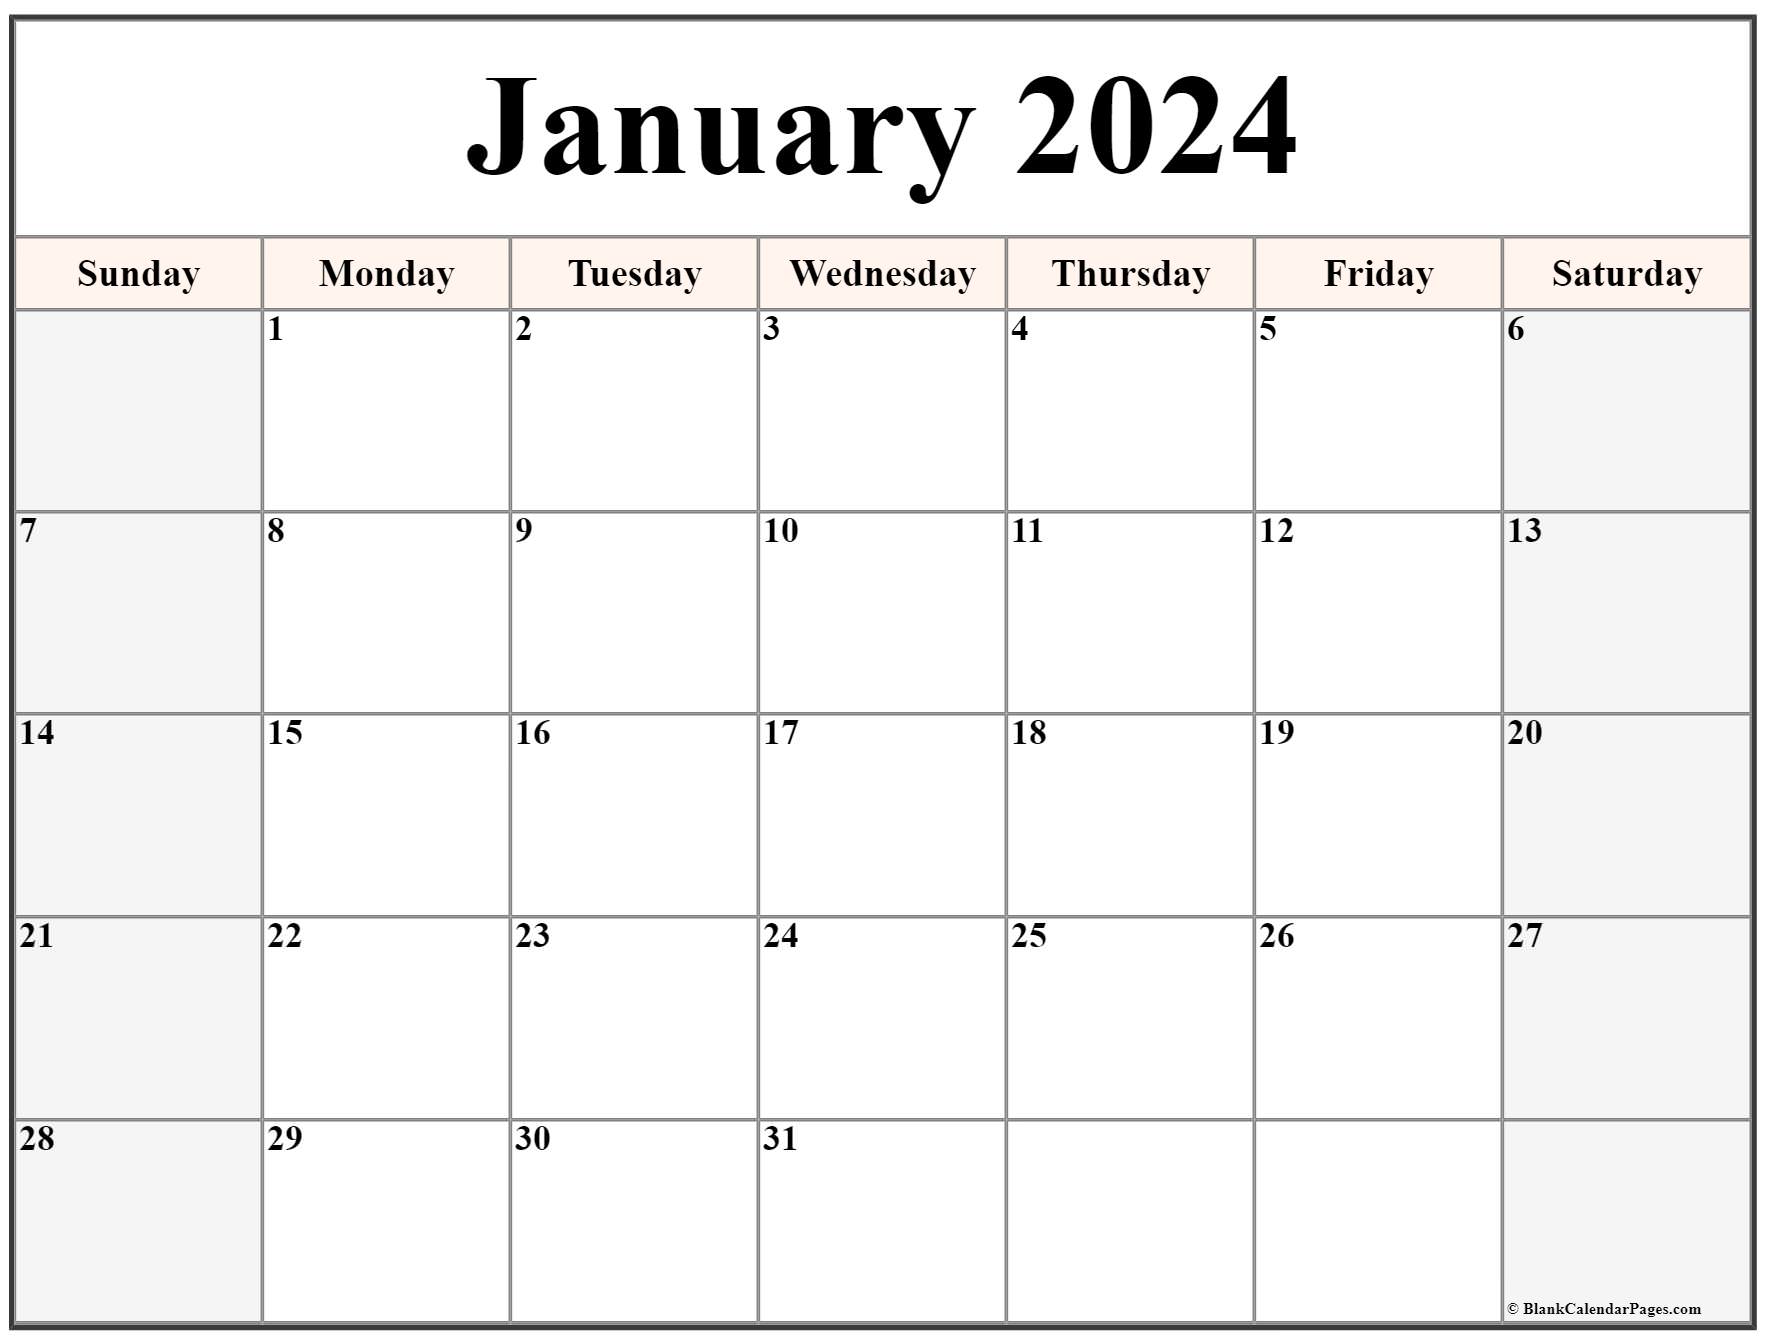 january-2023-calendar-printable-calendar-2023-planner-2023-design